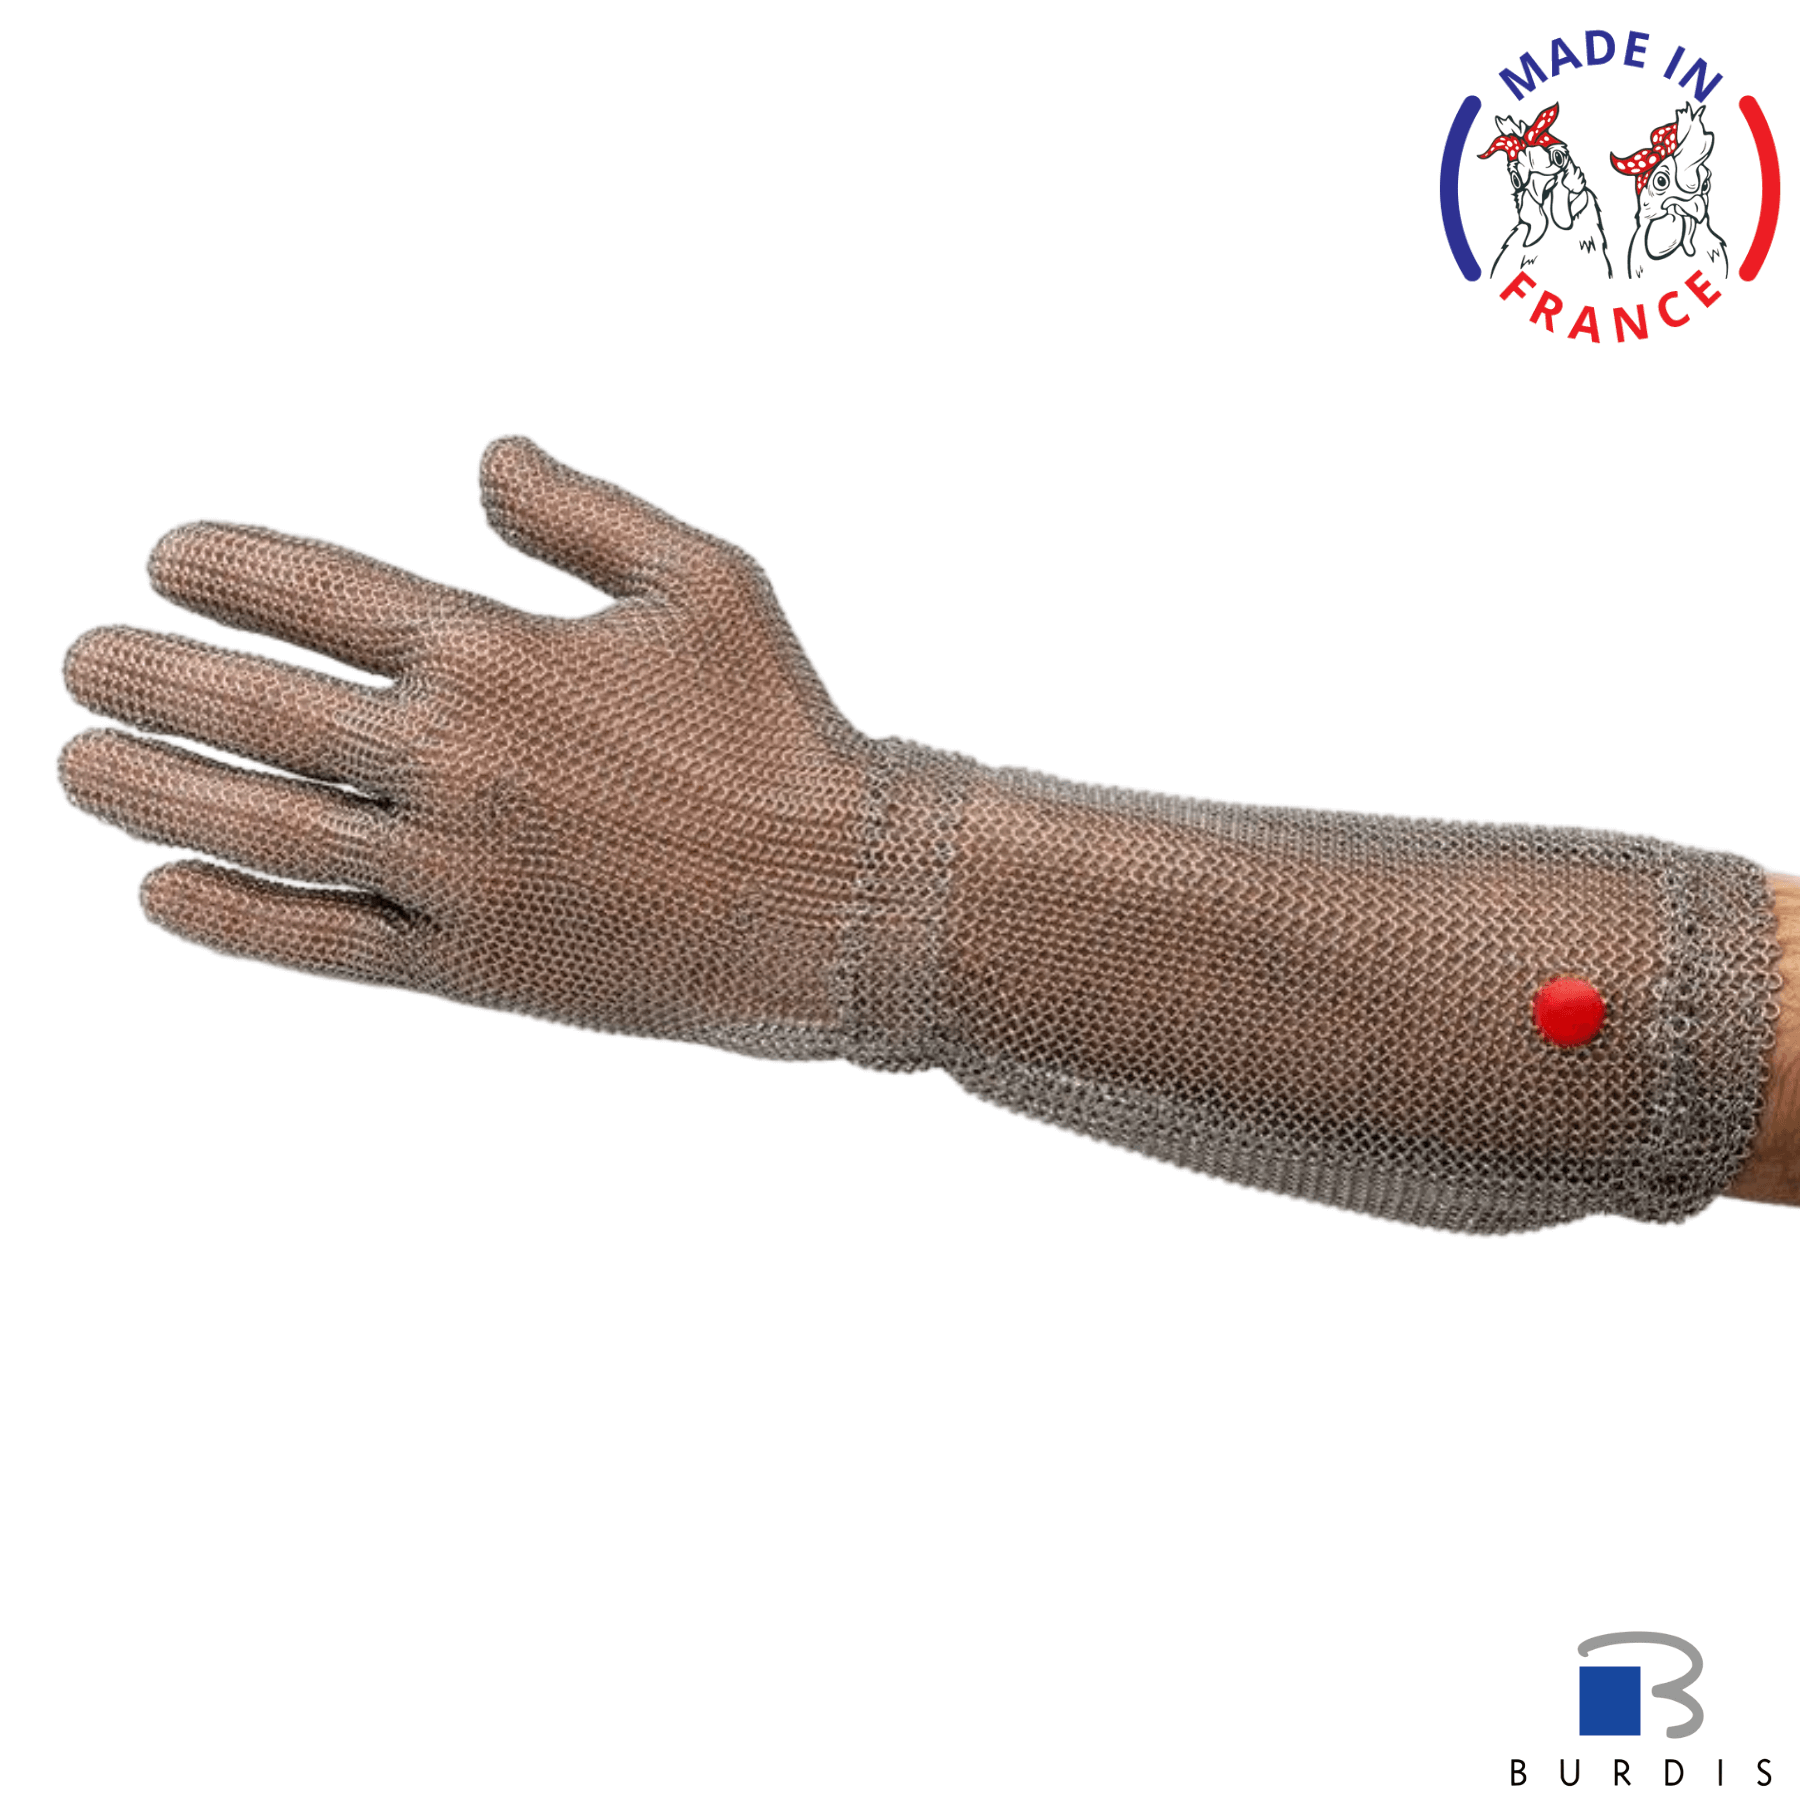 https://media1.burdis.fr/2193-thickbox_default/stainless-steel-metal-mesh-gloves.jpg